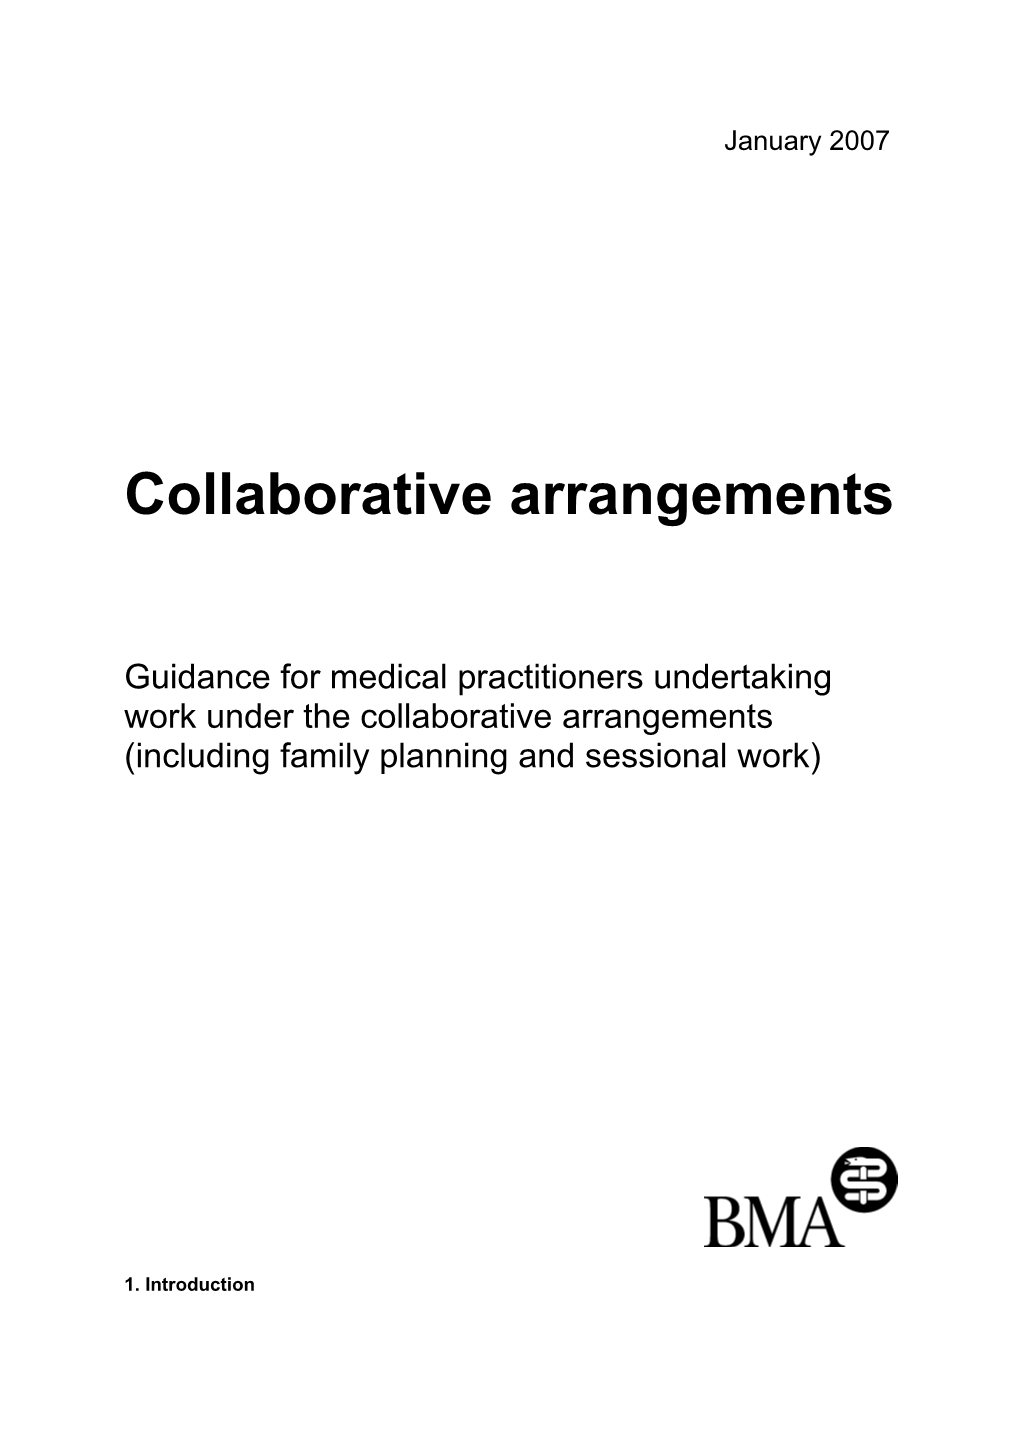 Guidance Note on Collaborative Arrangements